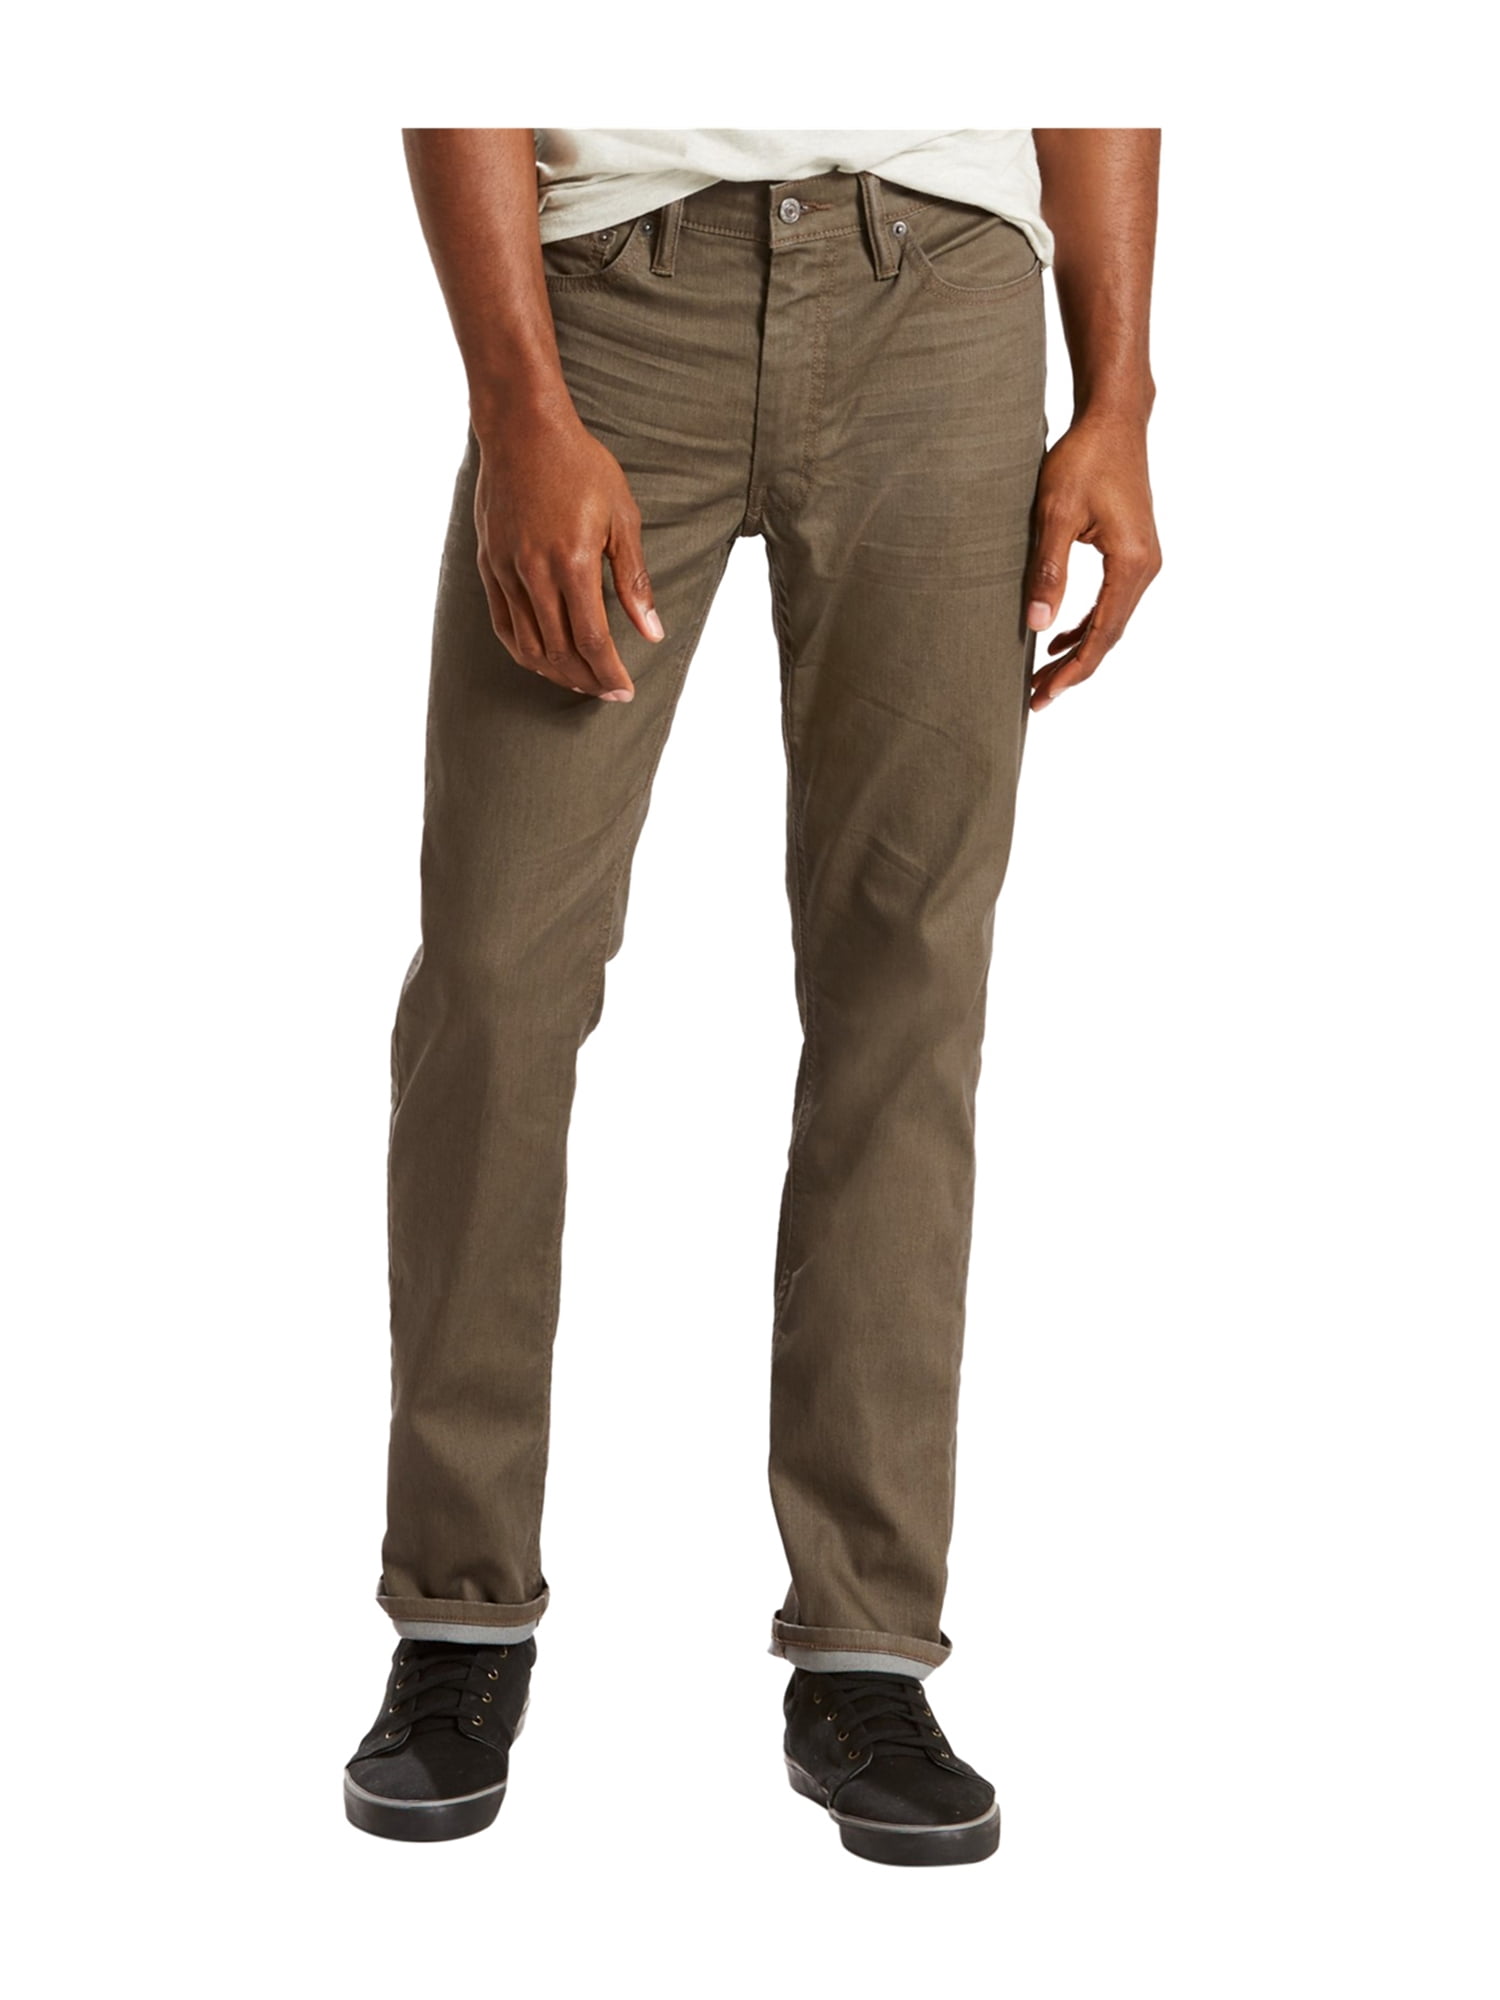 Levi's Mens Commuter Slim Fit Jeans khakidenim 28x30 | Walmart Canada